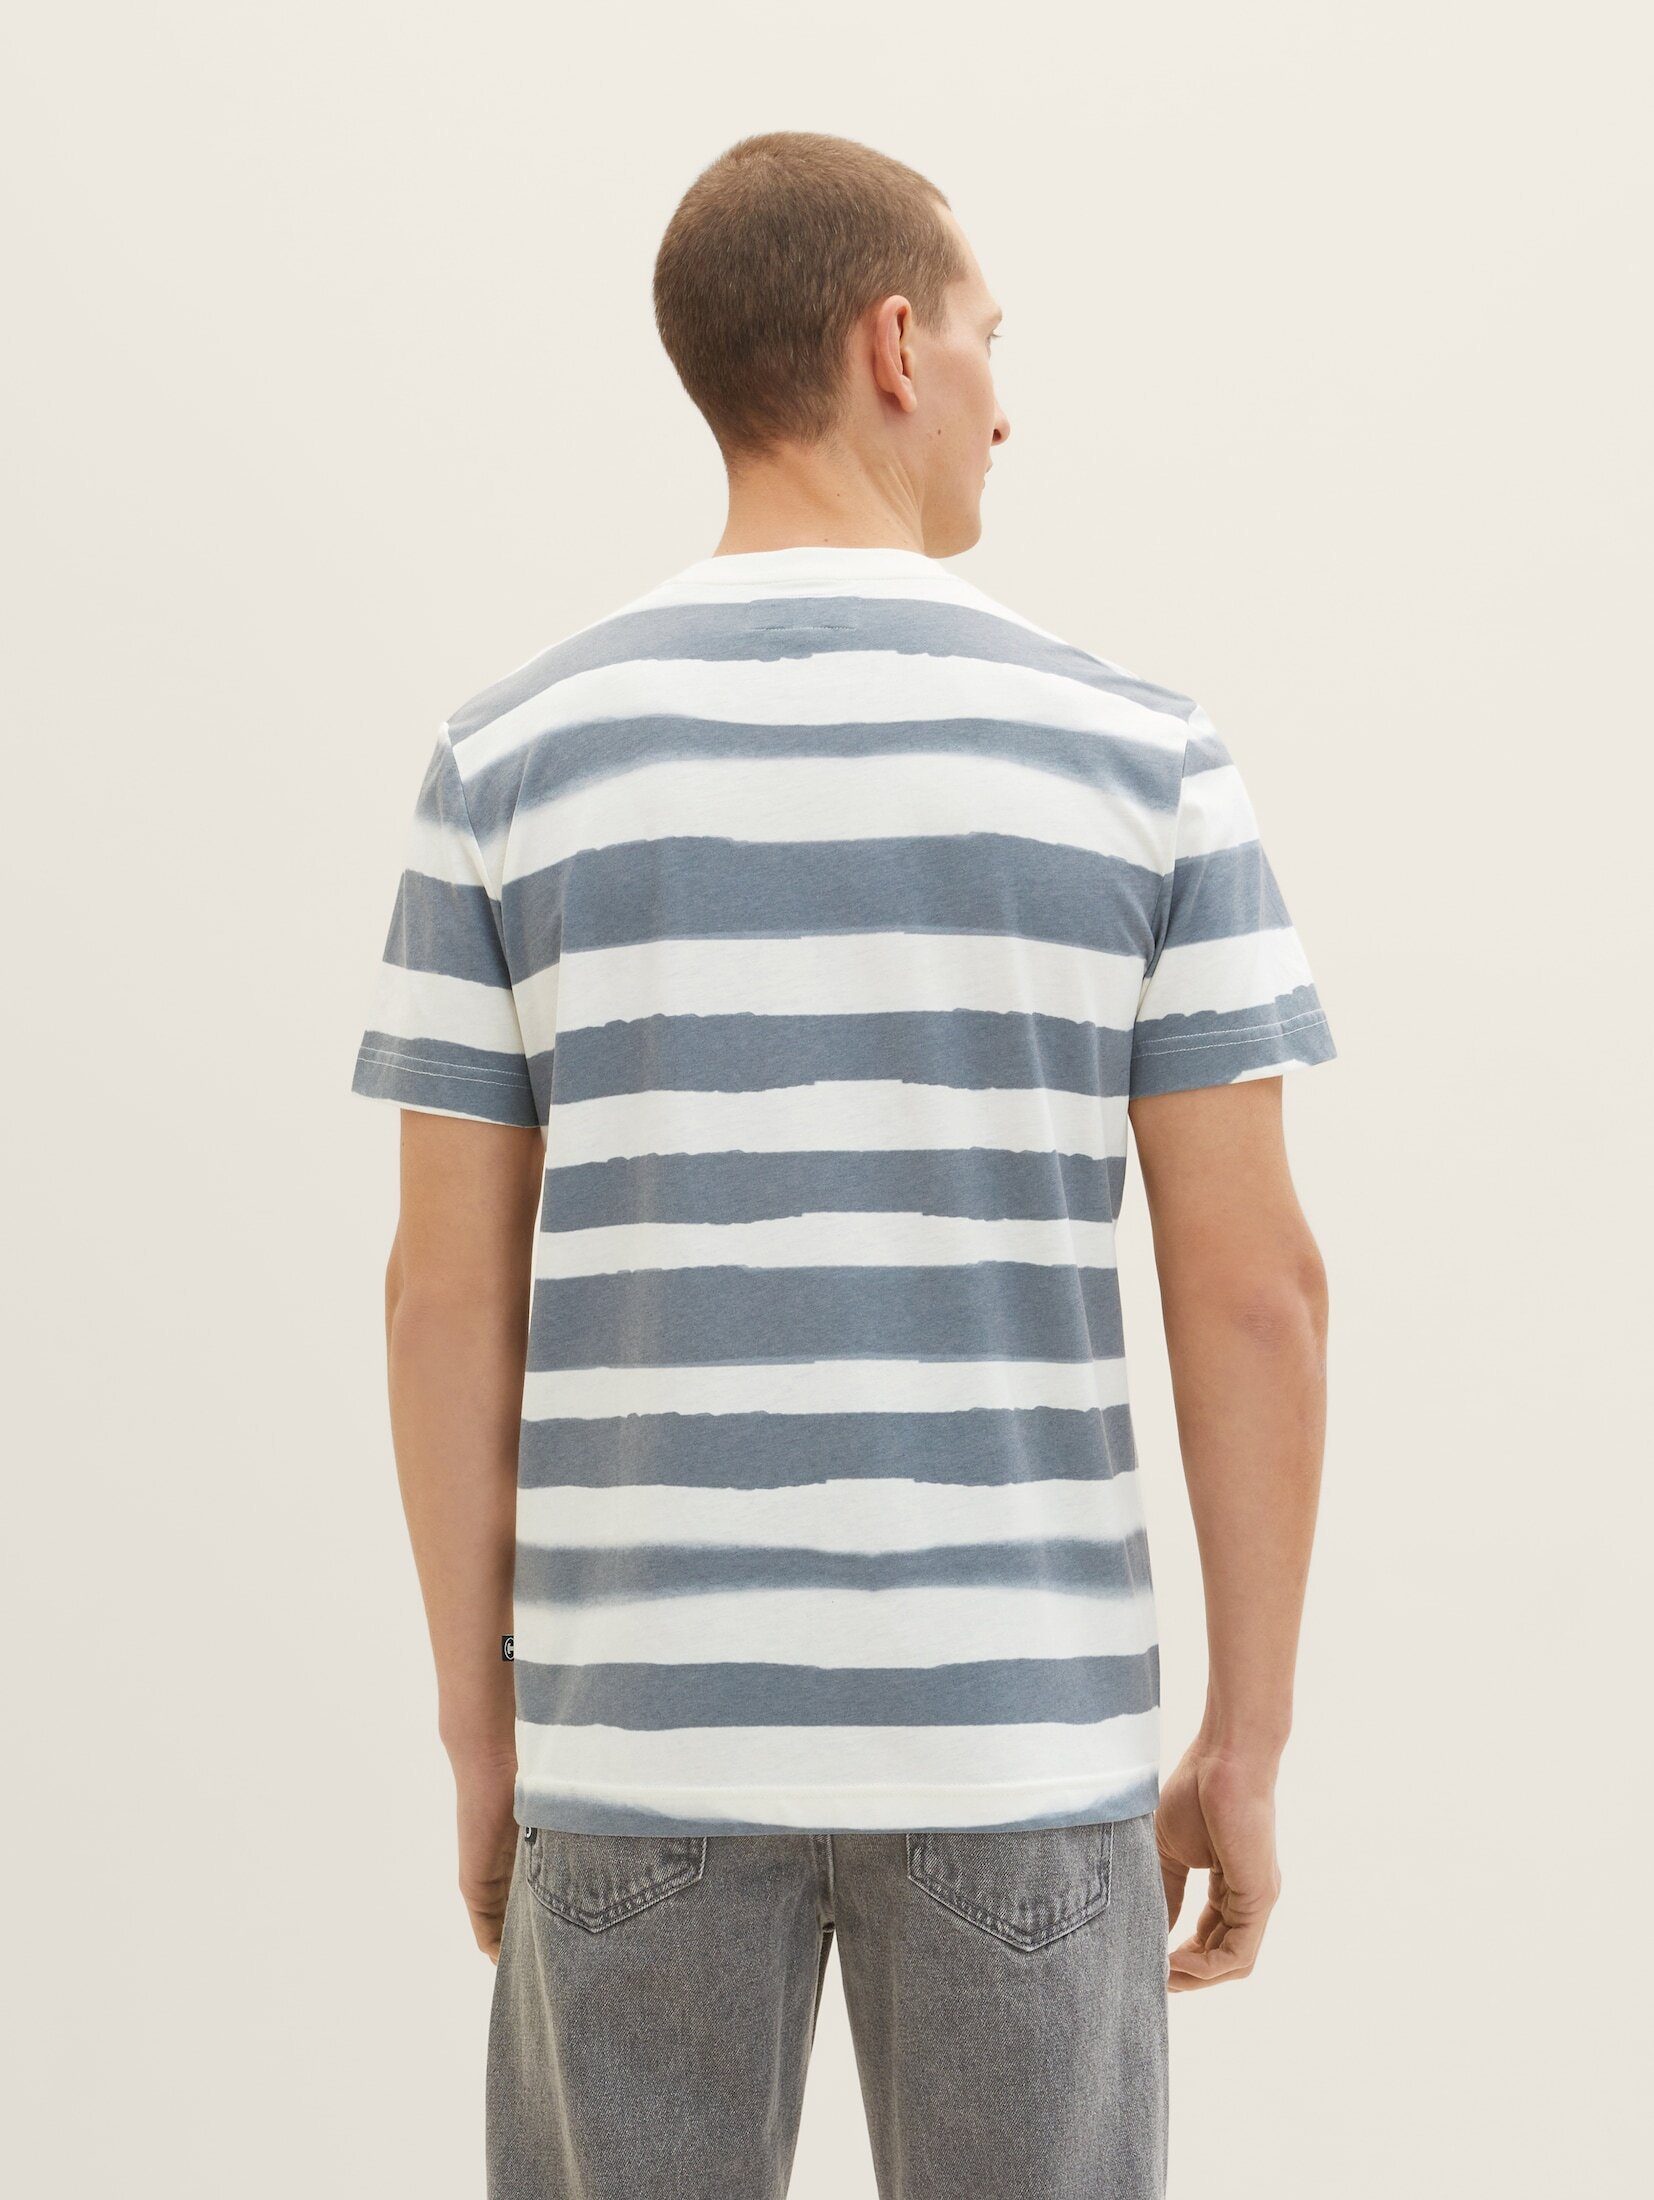 beige stripes mit water TAILOR navy Allover-Print T-Shirt base T-Shirt TOM